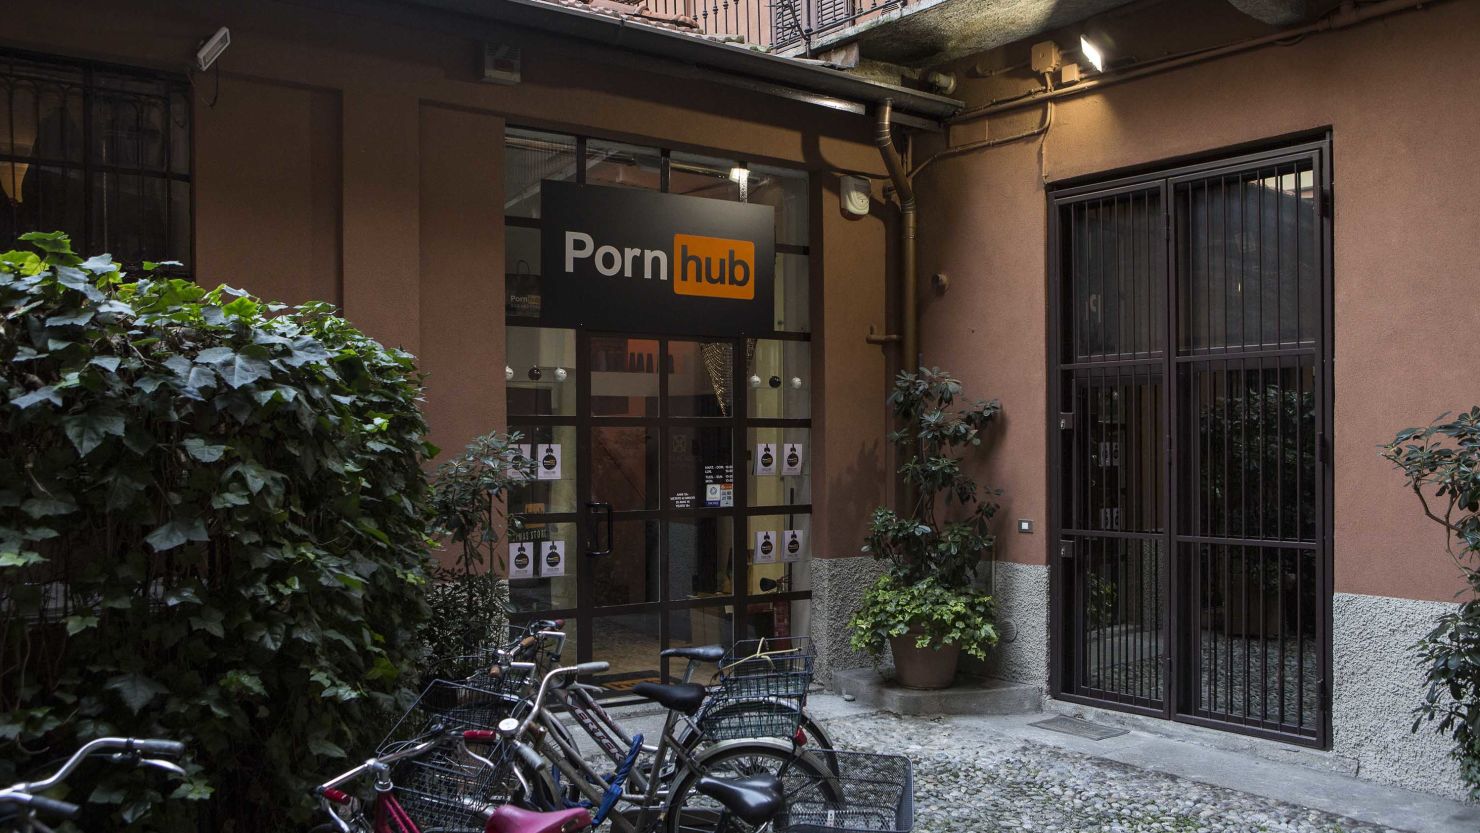 Pornhub's pop-up store in Milan in December 2017